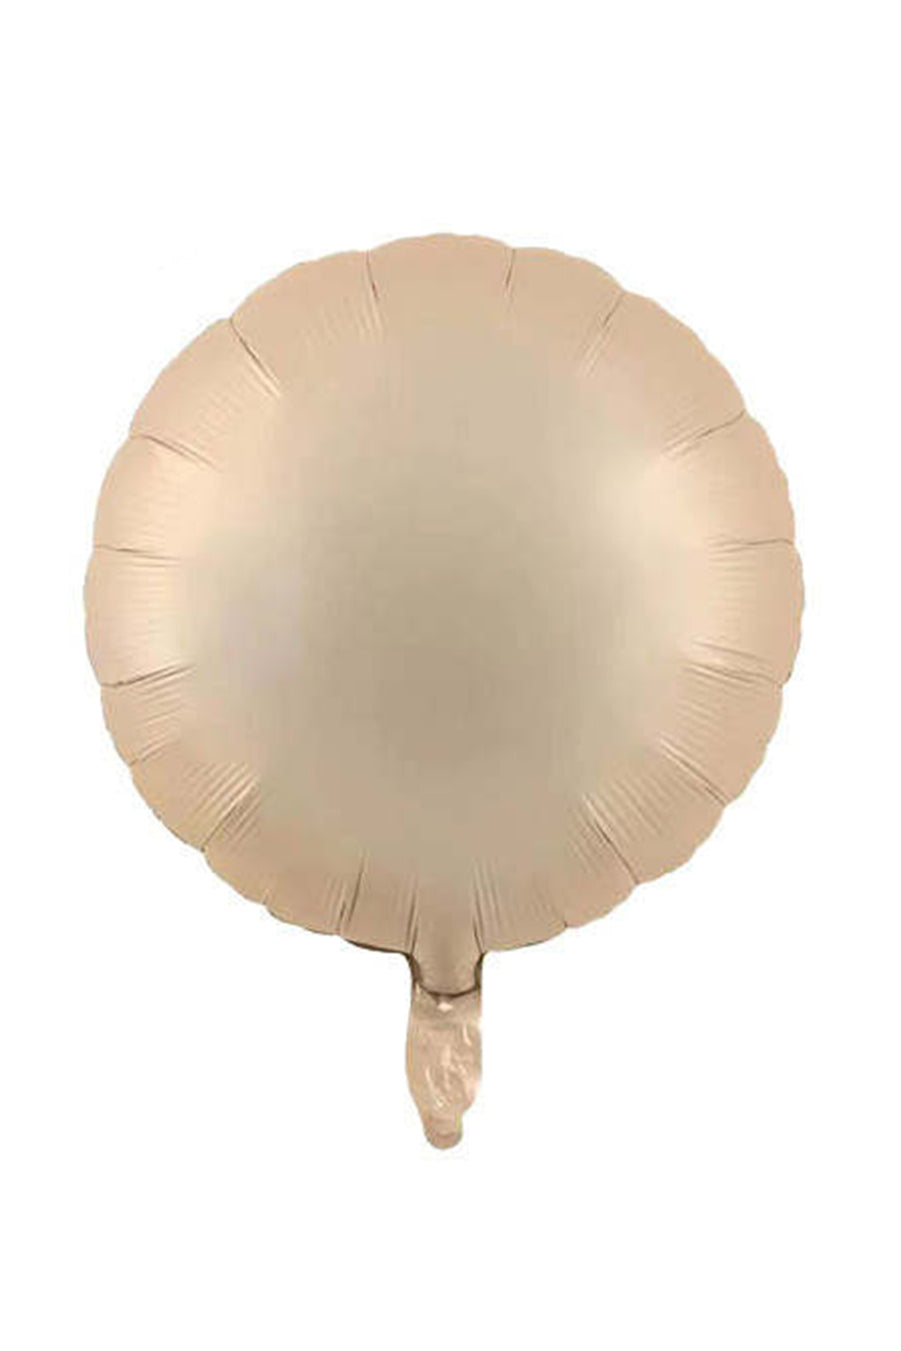 matte-caramel-round-balloon.jpg